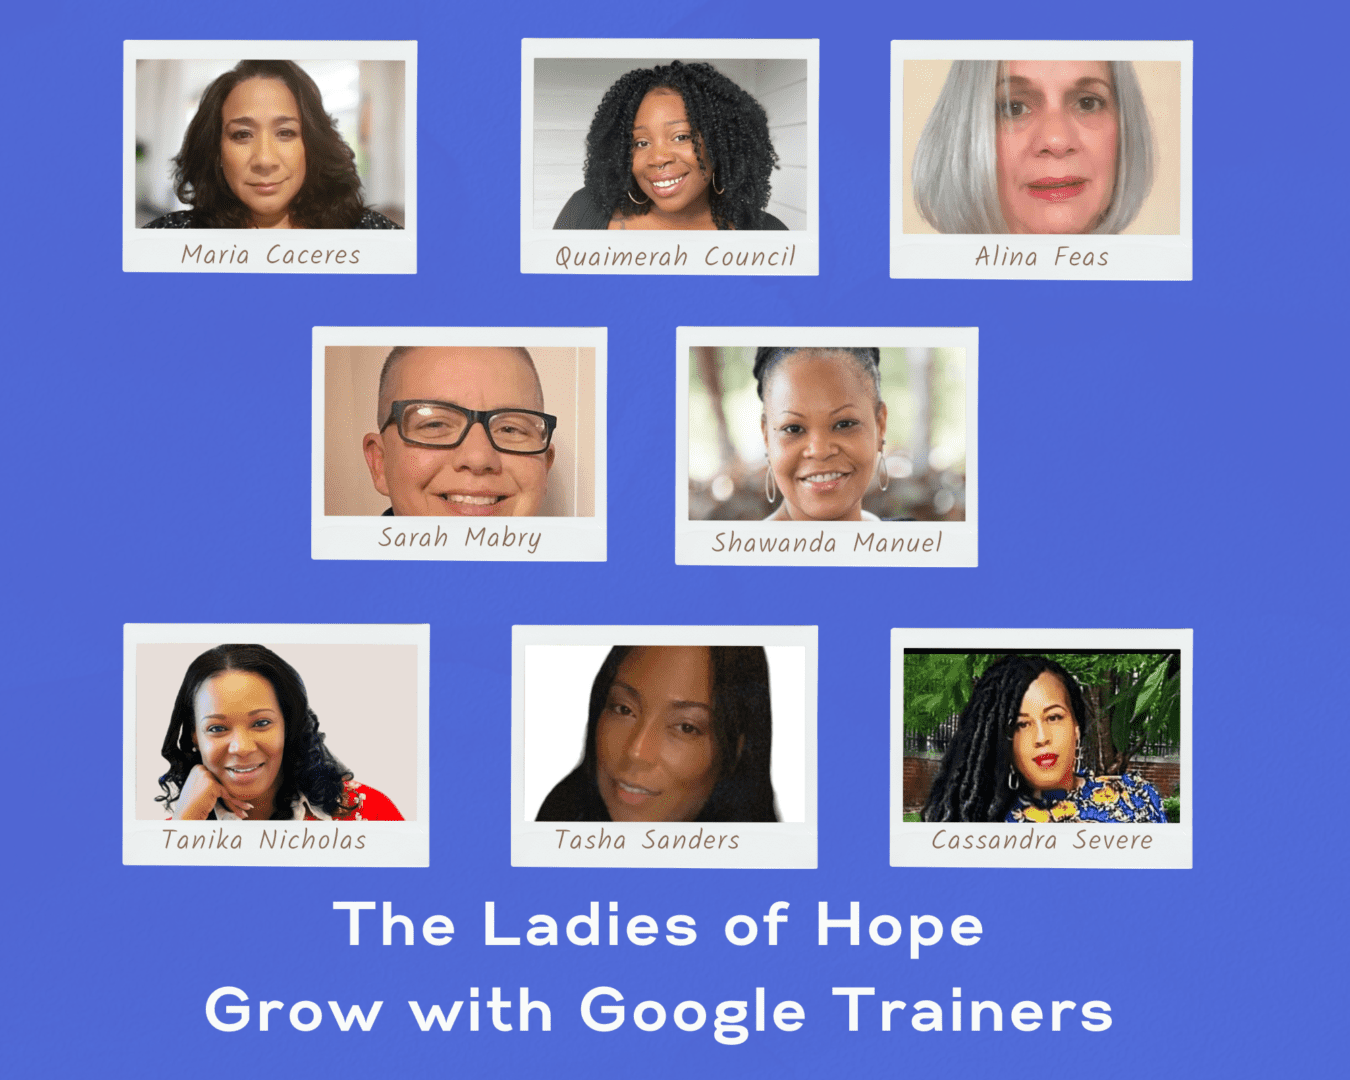 The ladies of hope grow with Google trainers: Maria Caceres, Quainerah Council, Alina Feas, Sarah Mabry, Shawanda Manual, Tanika Nicholas, Tasha Sanders, Cassandra Severe